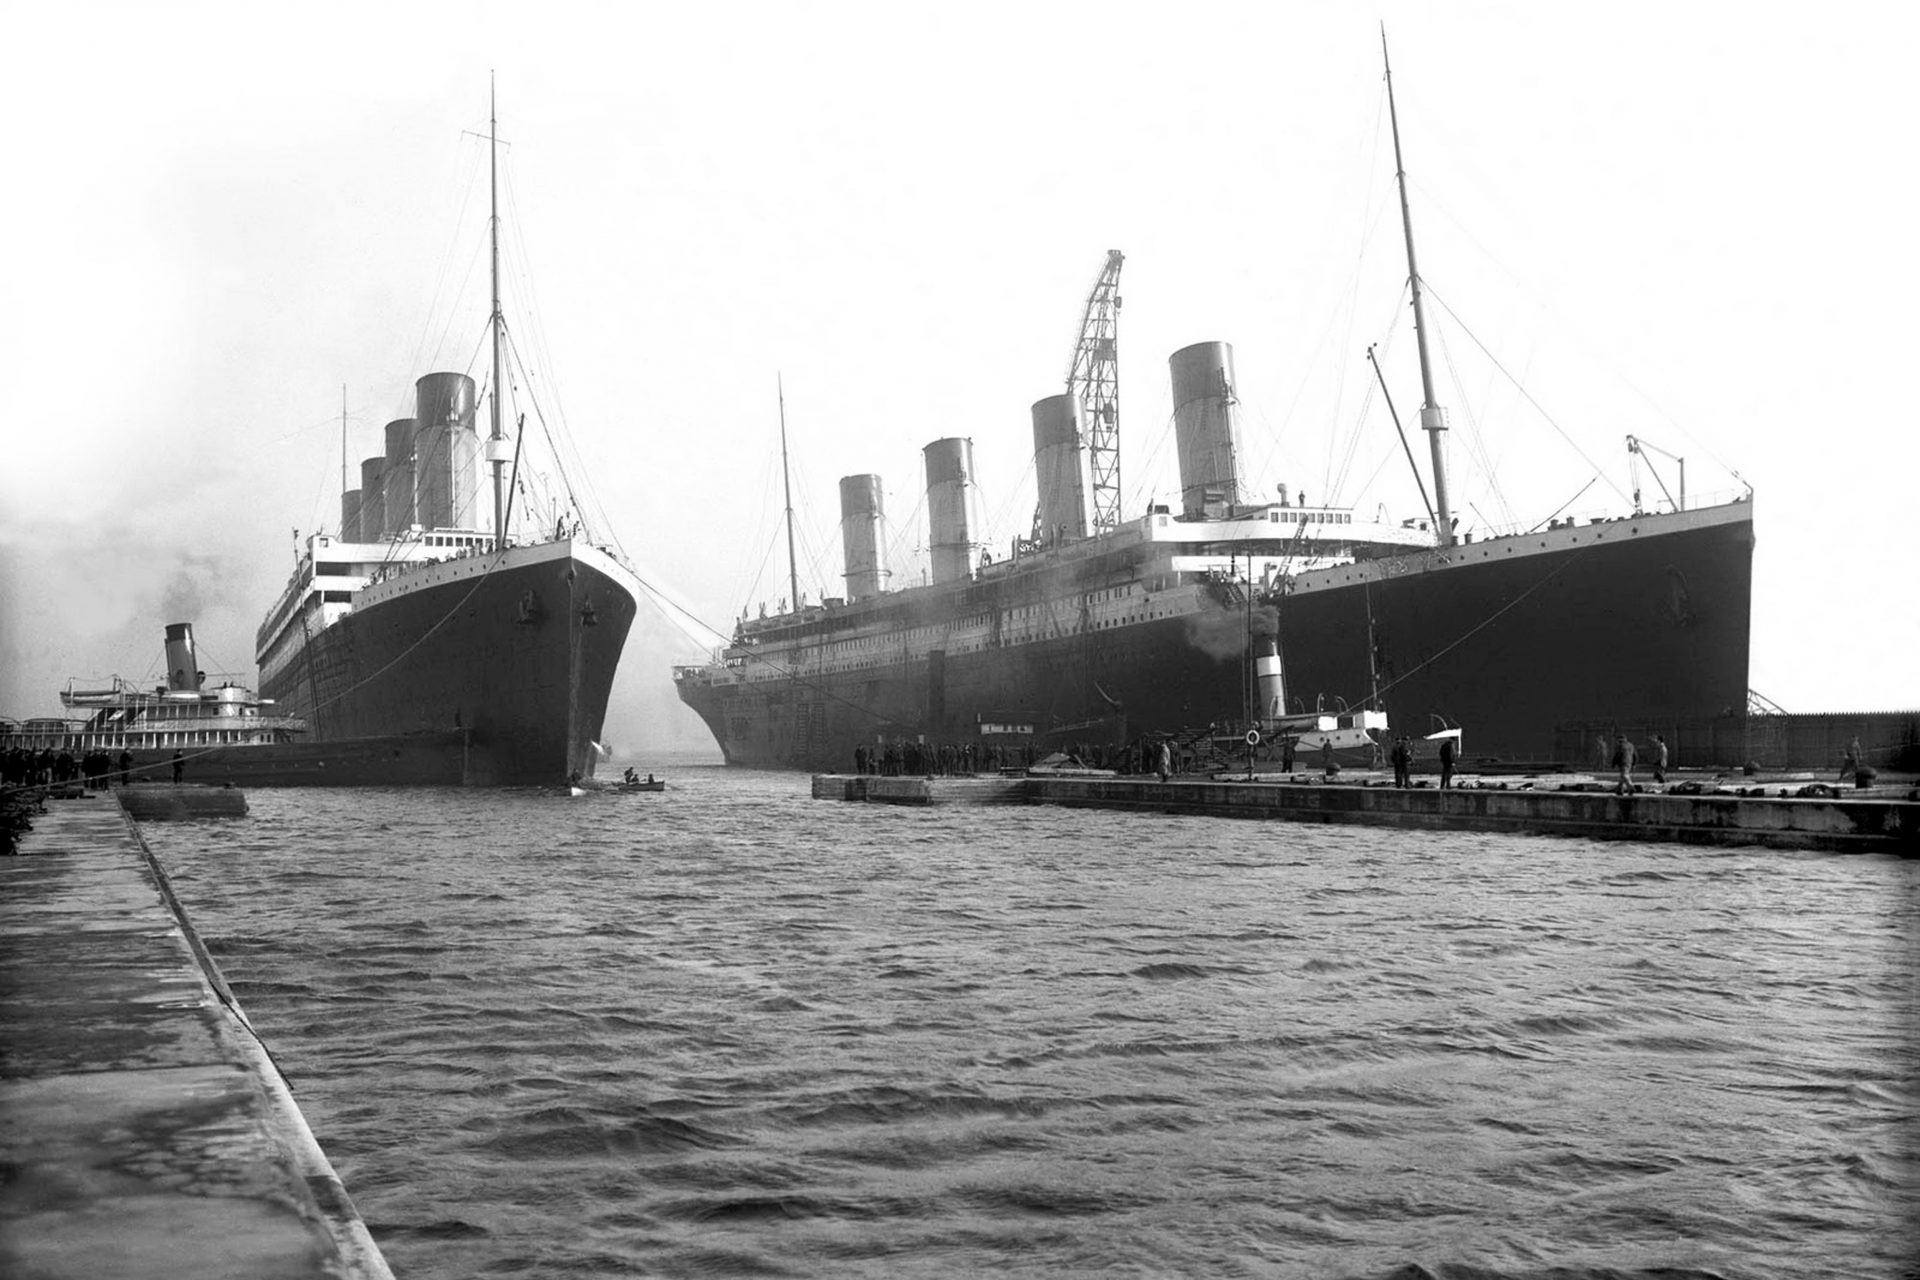 Olympic or Titanic?